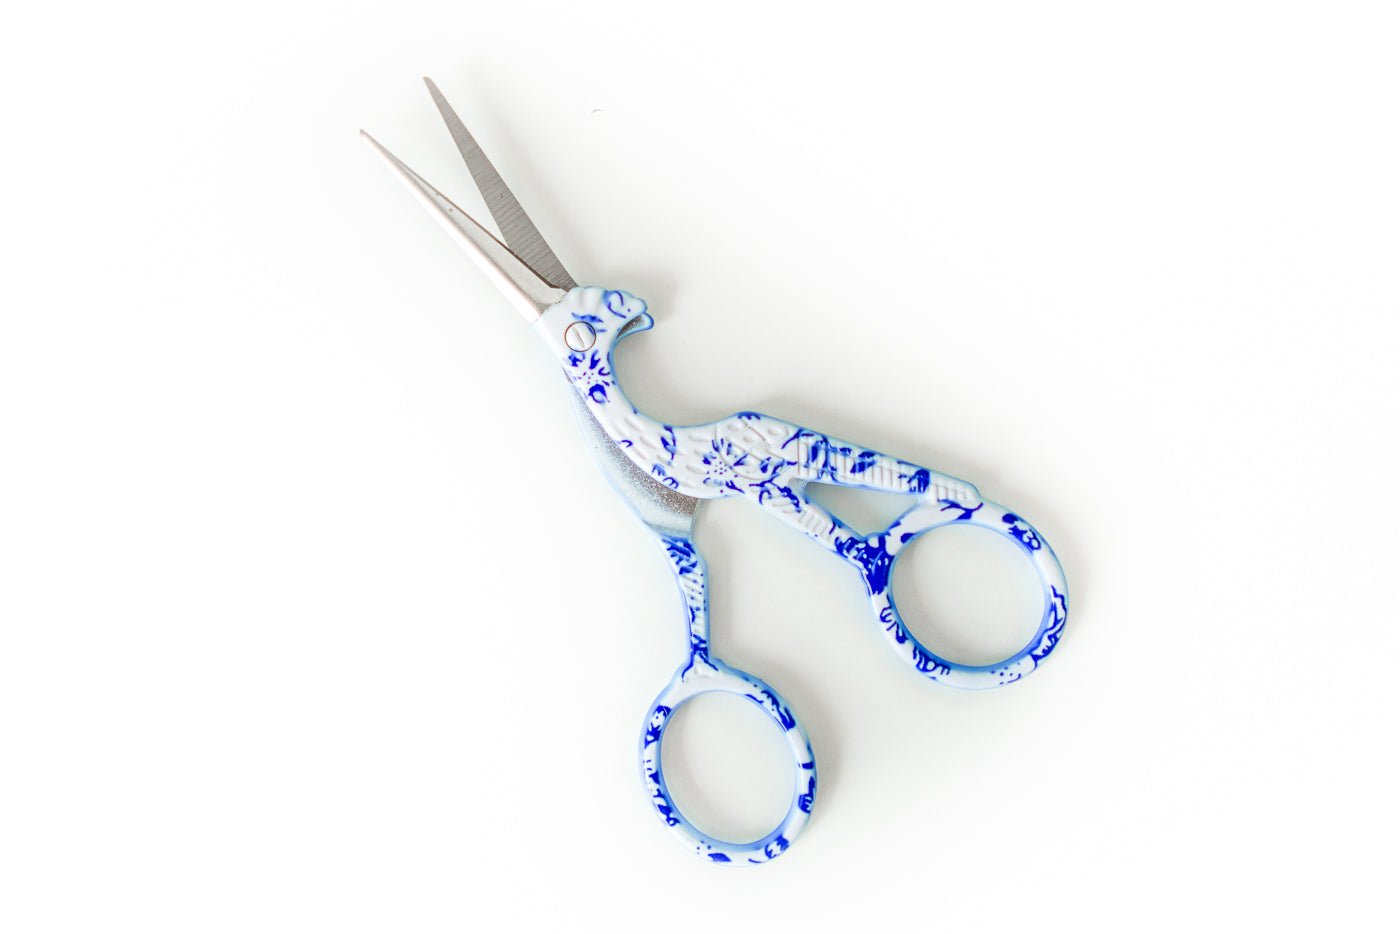 Polka dot small embroidery scissors